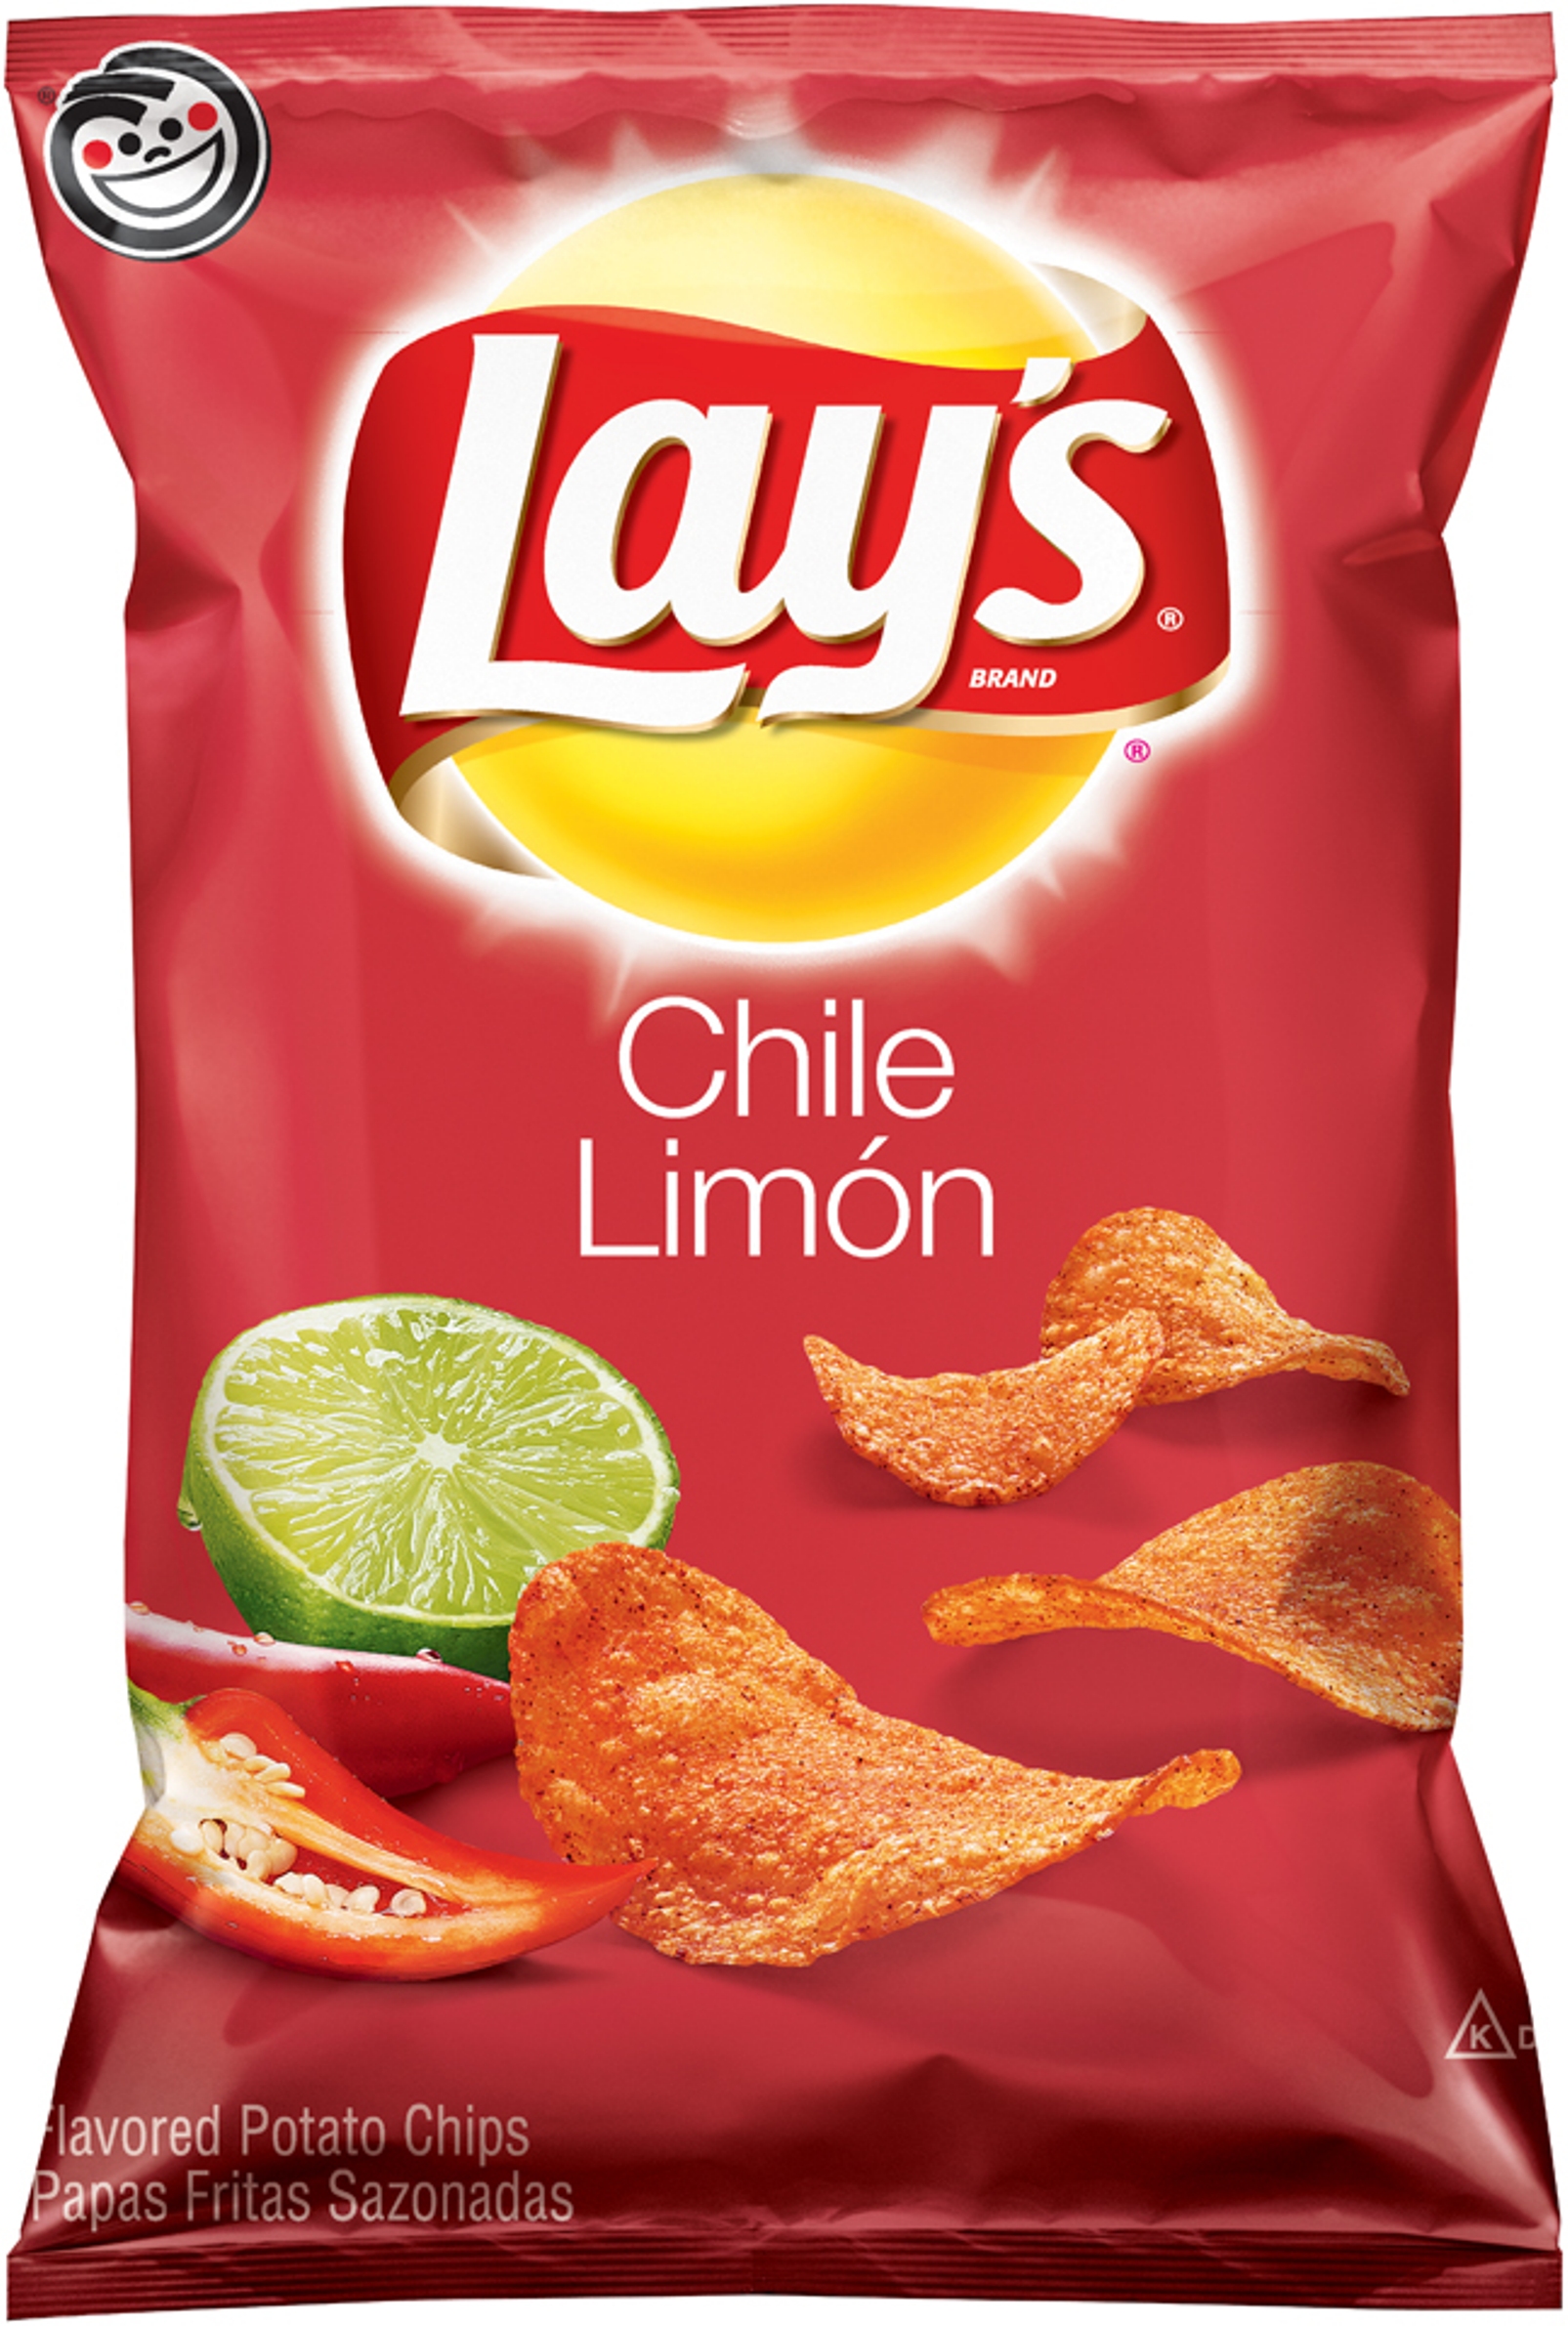 Lay's Chile Limon Flavored Potato Chips, 9.5 oz